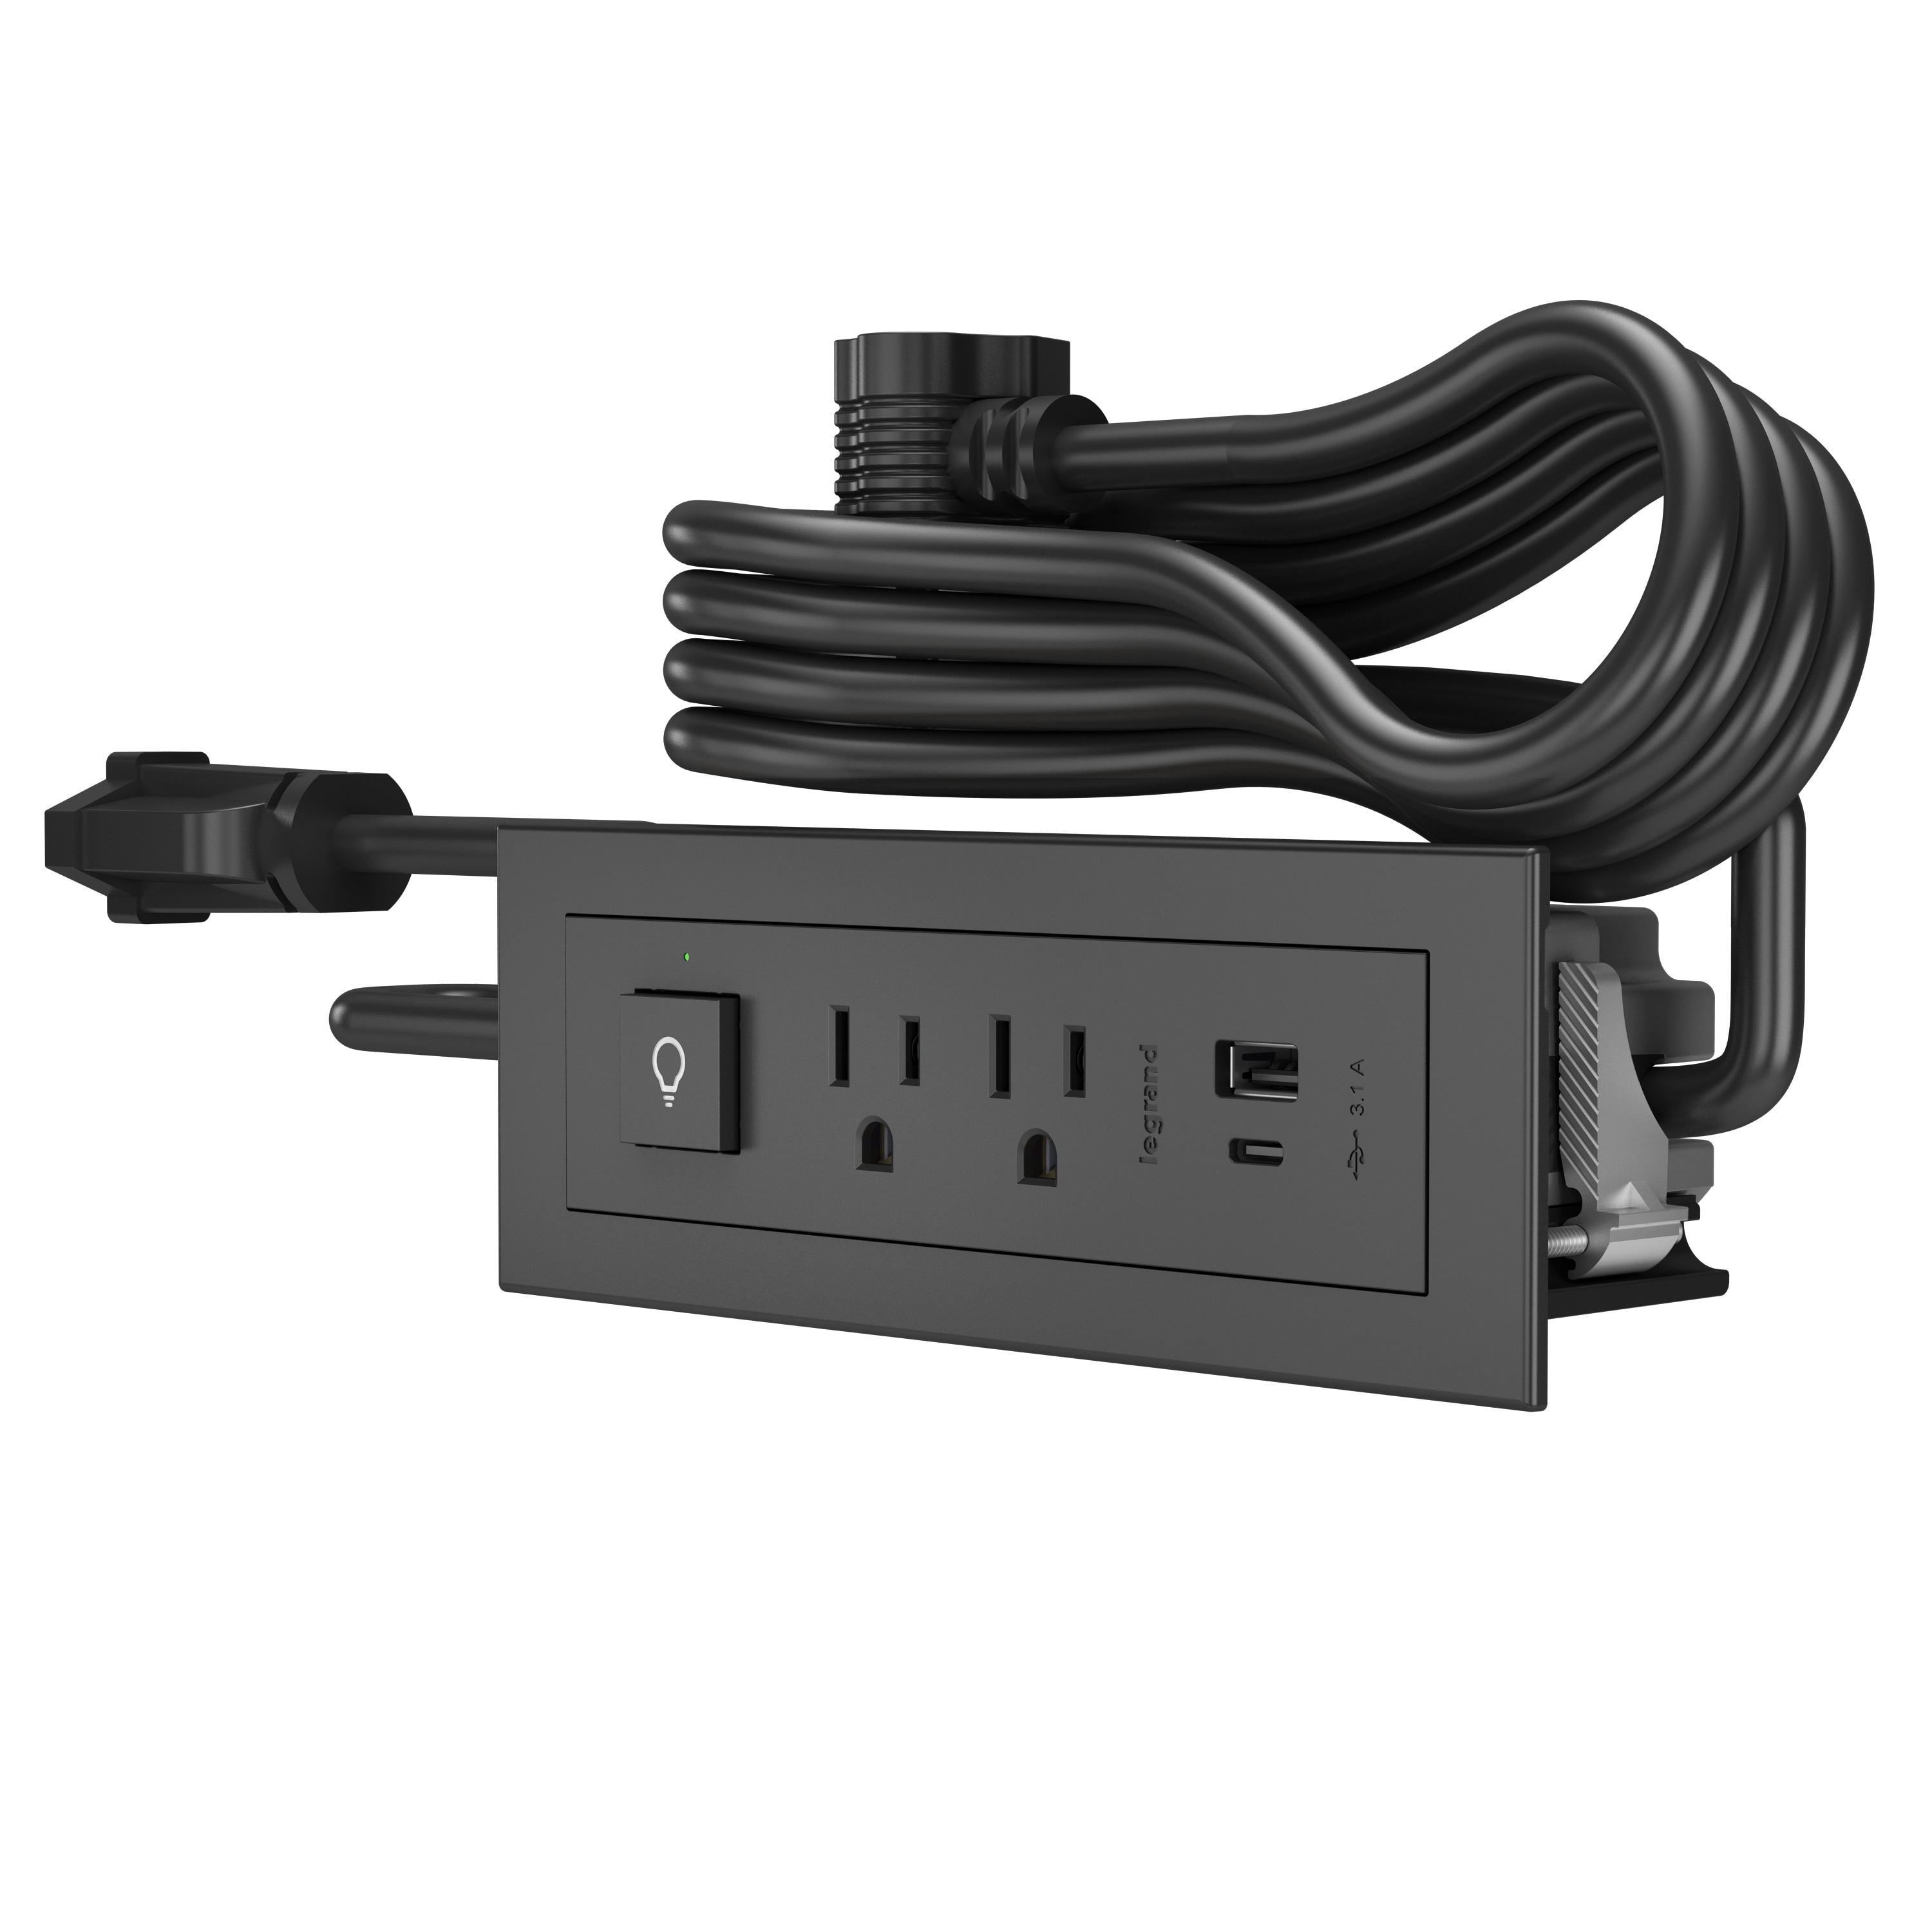 Legrand 2-Outlet 2-USB Ports Black Power Strip